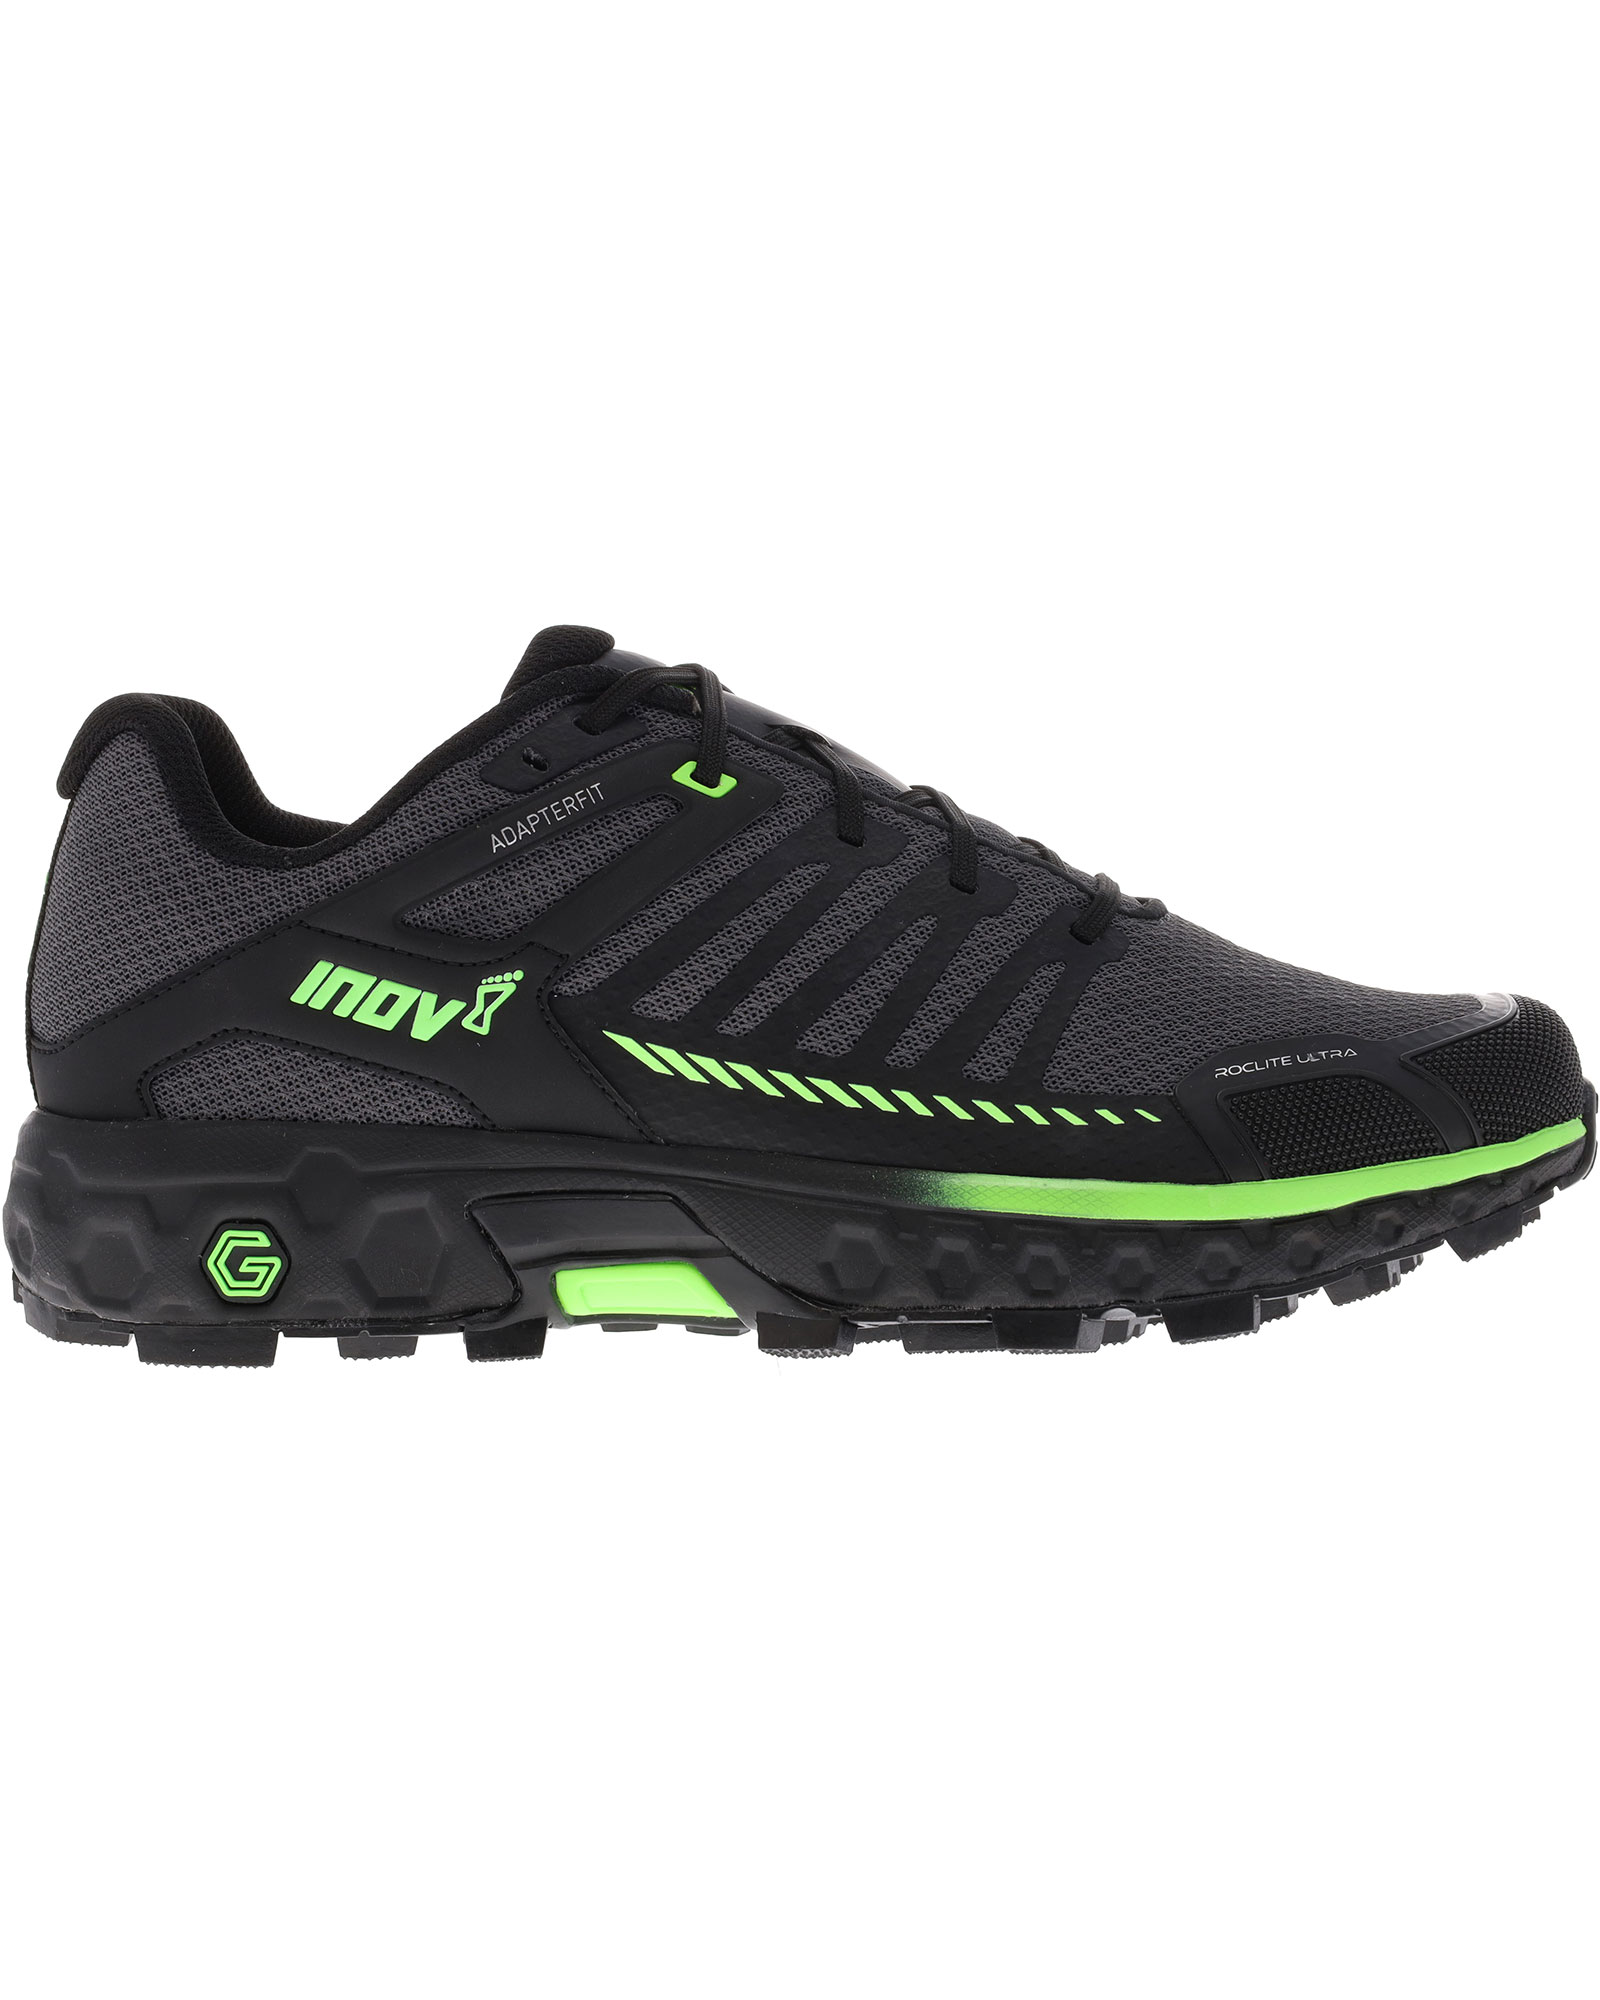 INOV8 Men's Roclite Ultra G 320 Trail Running Shoes